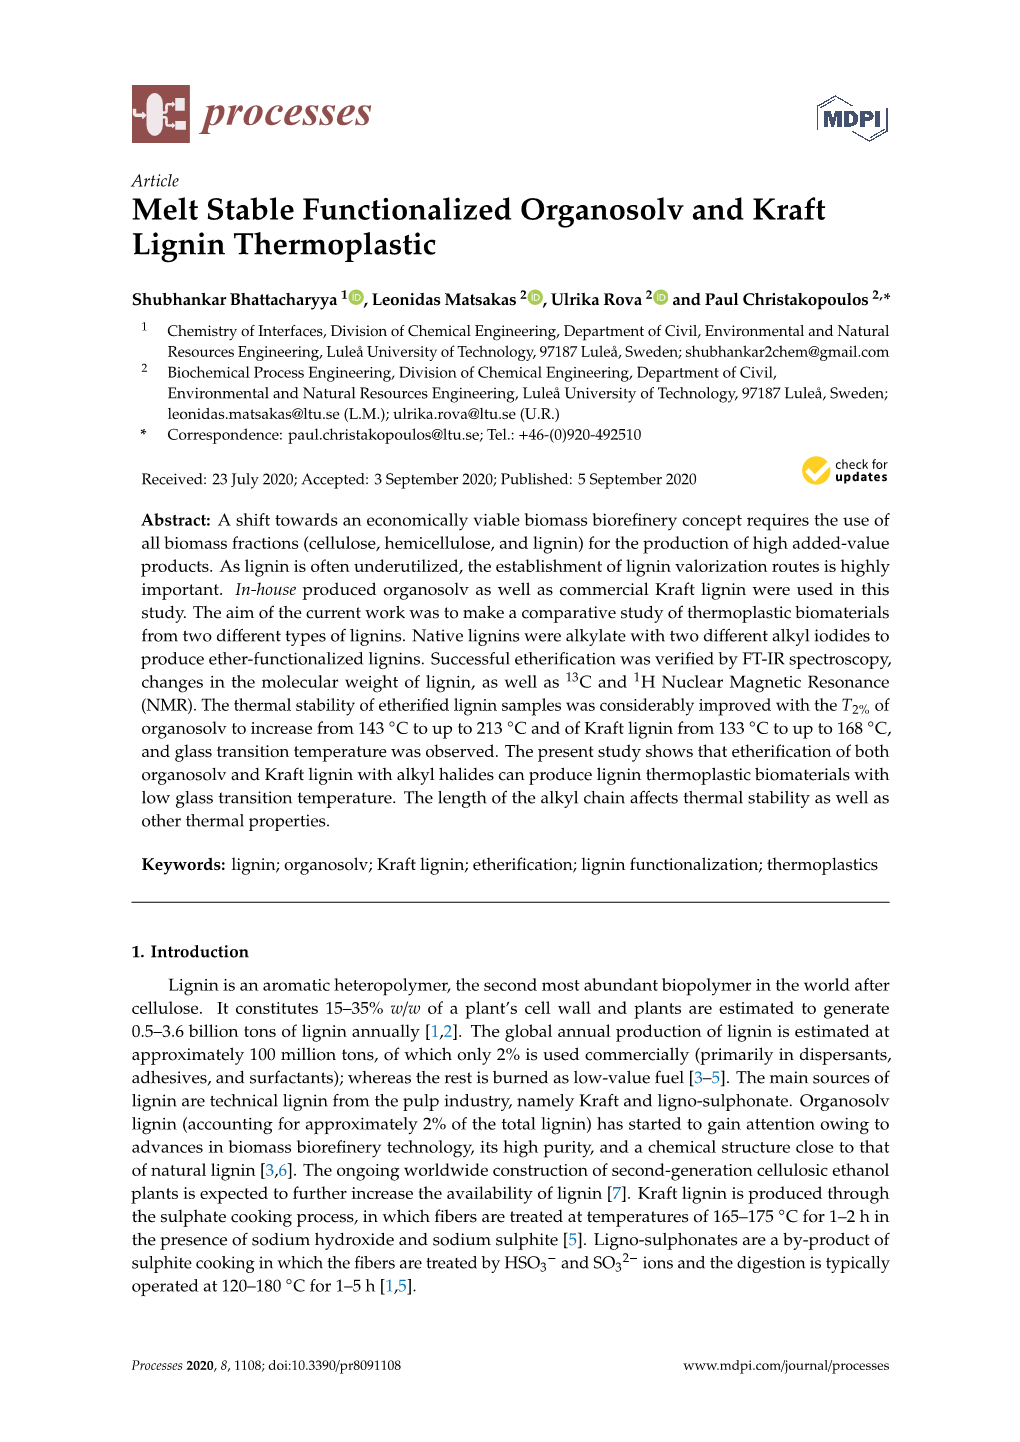 Melt Stable Functionalized Organosolv and Kraft Lignin Thermoplastic